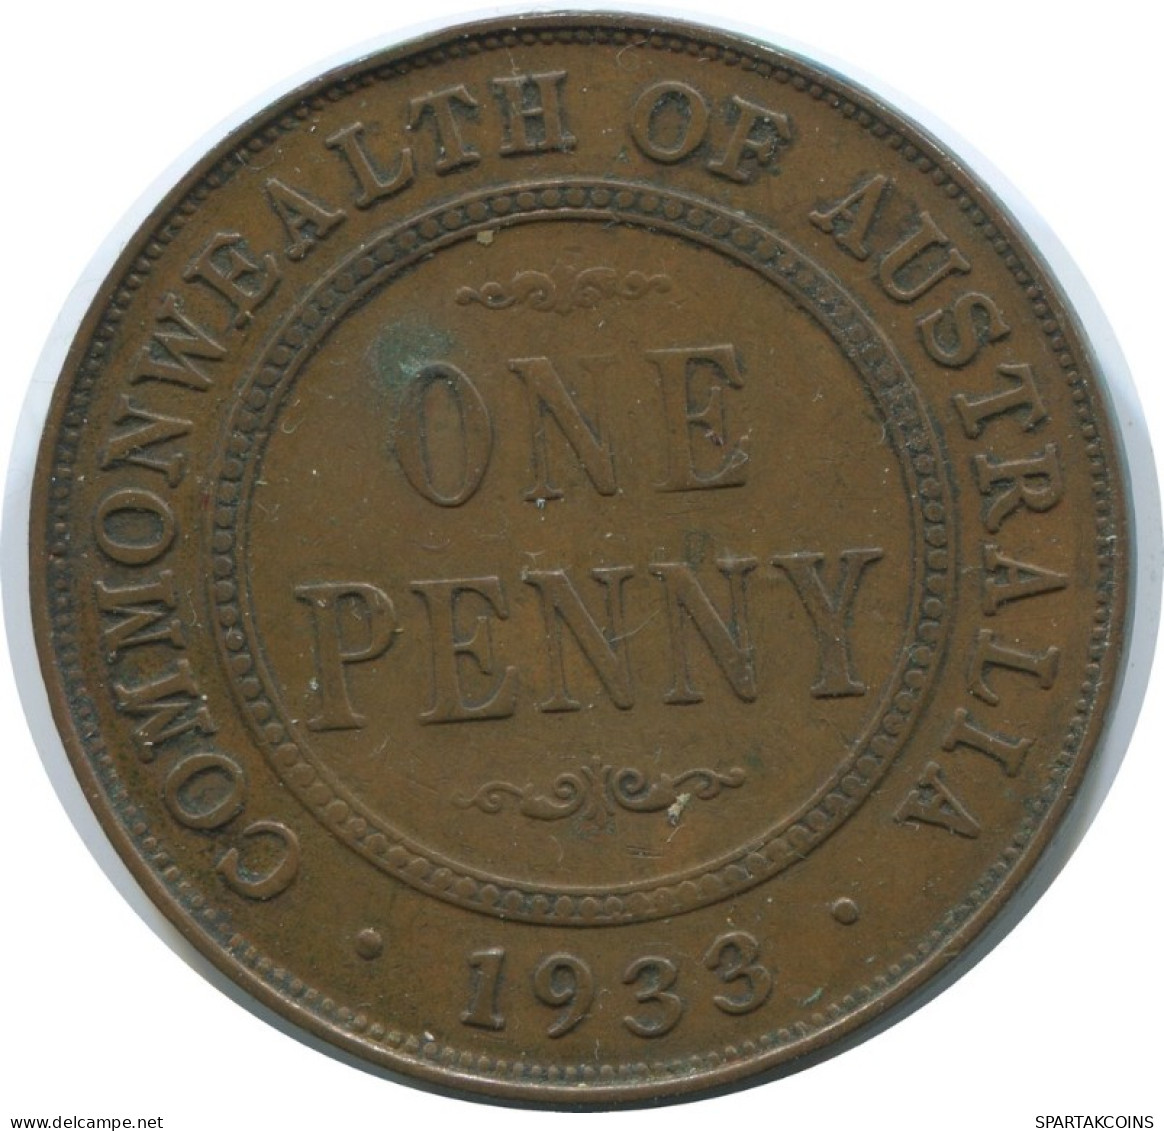 1 PENNI 1933 AUSTRALIEN AUSTRALIA Münze #AE787.16.D.A - Penny